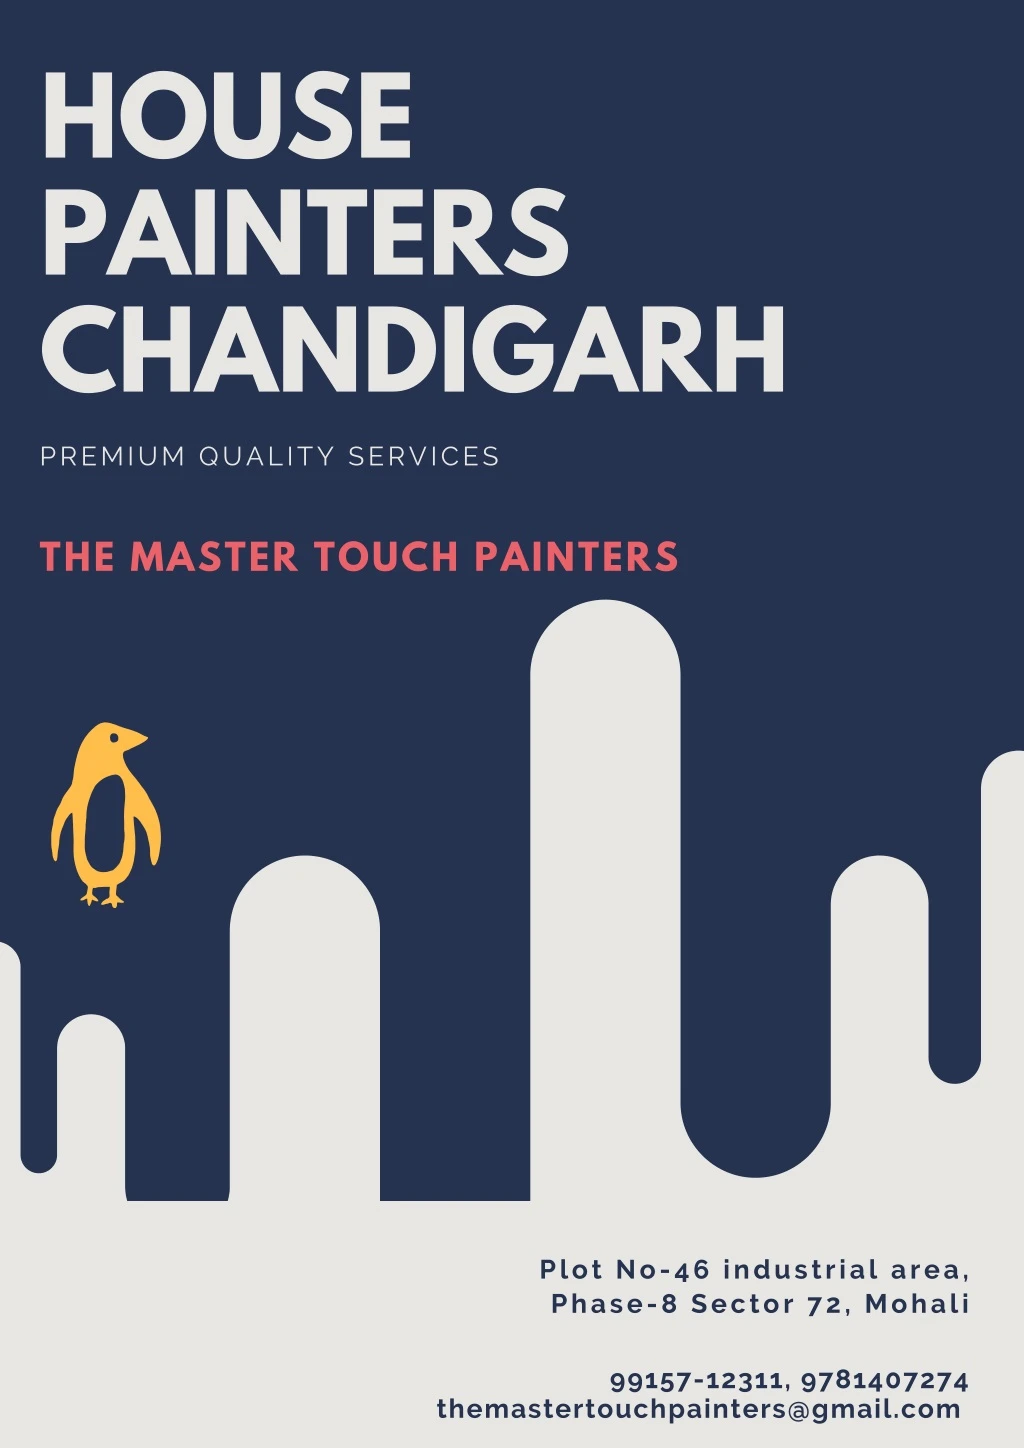 house painters chandigarh premium quality services